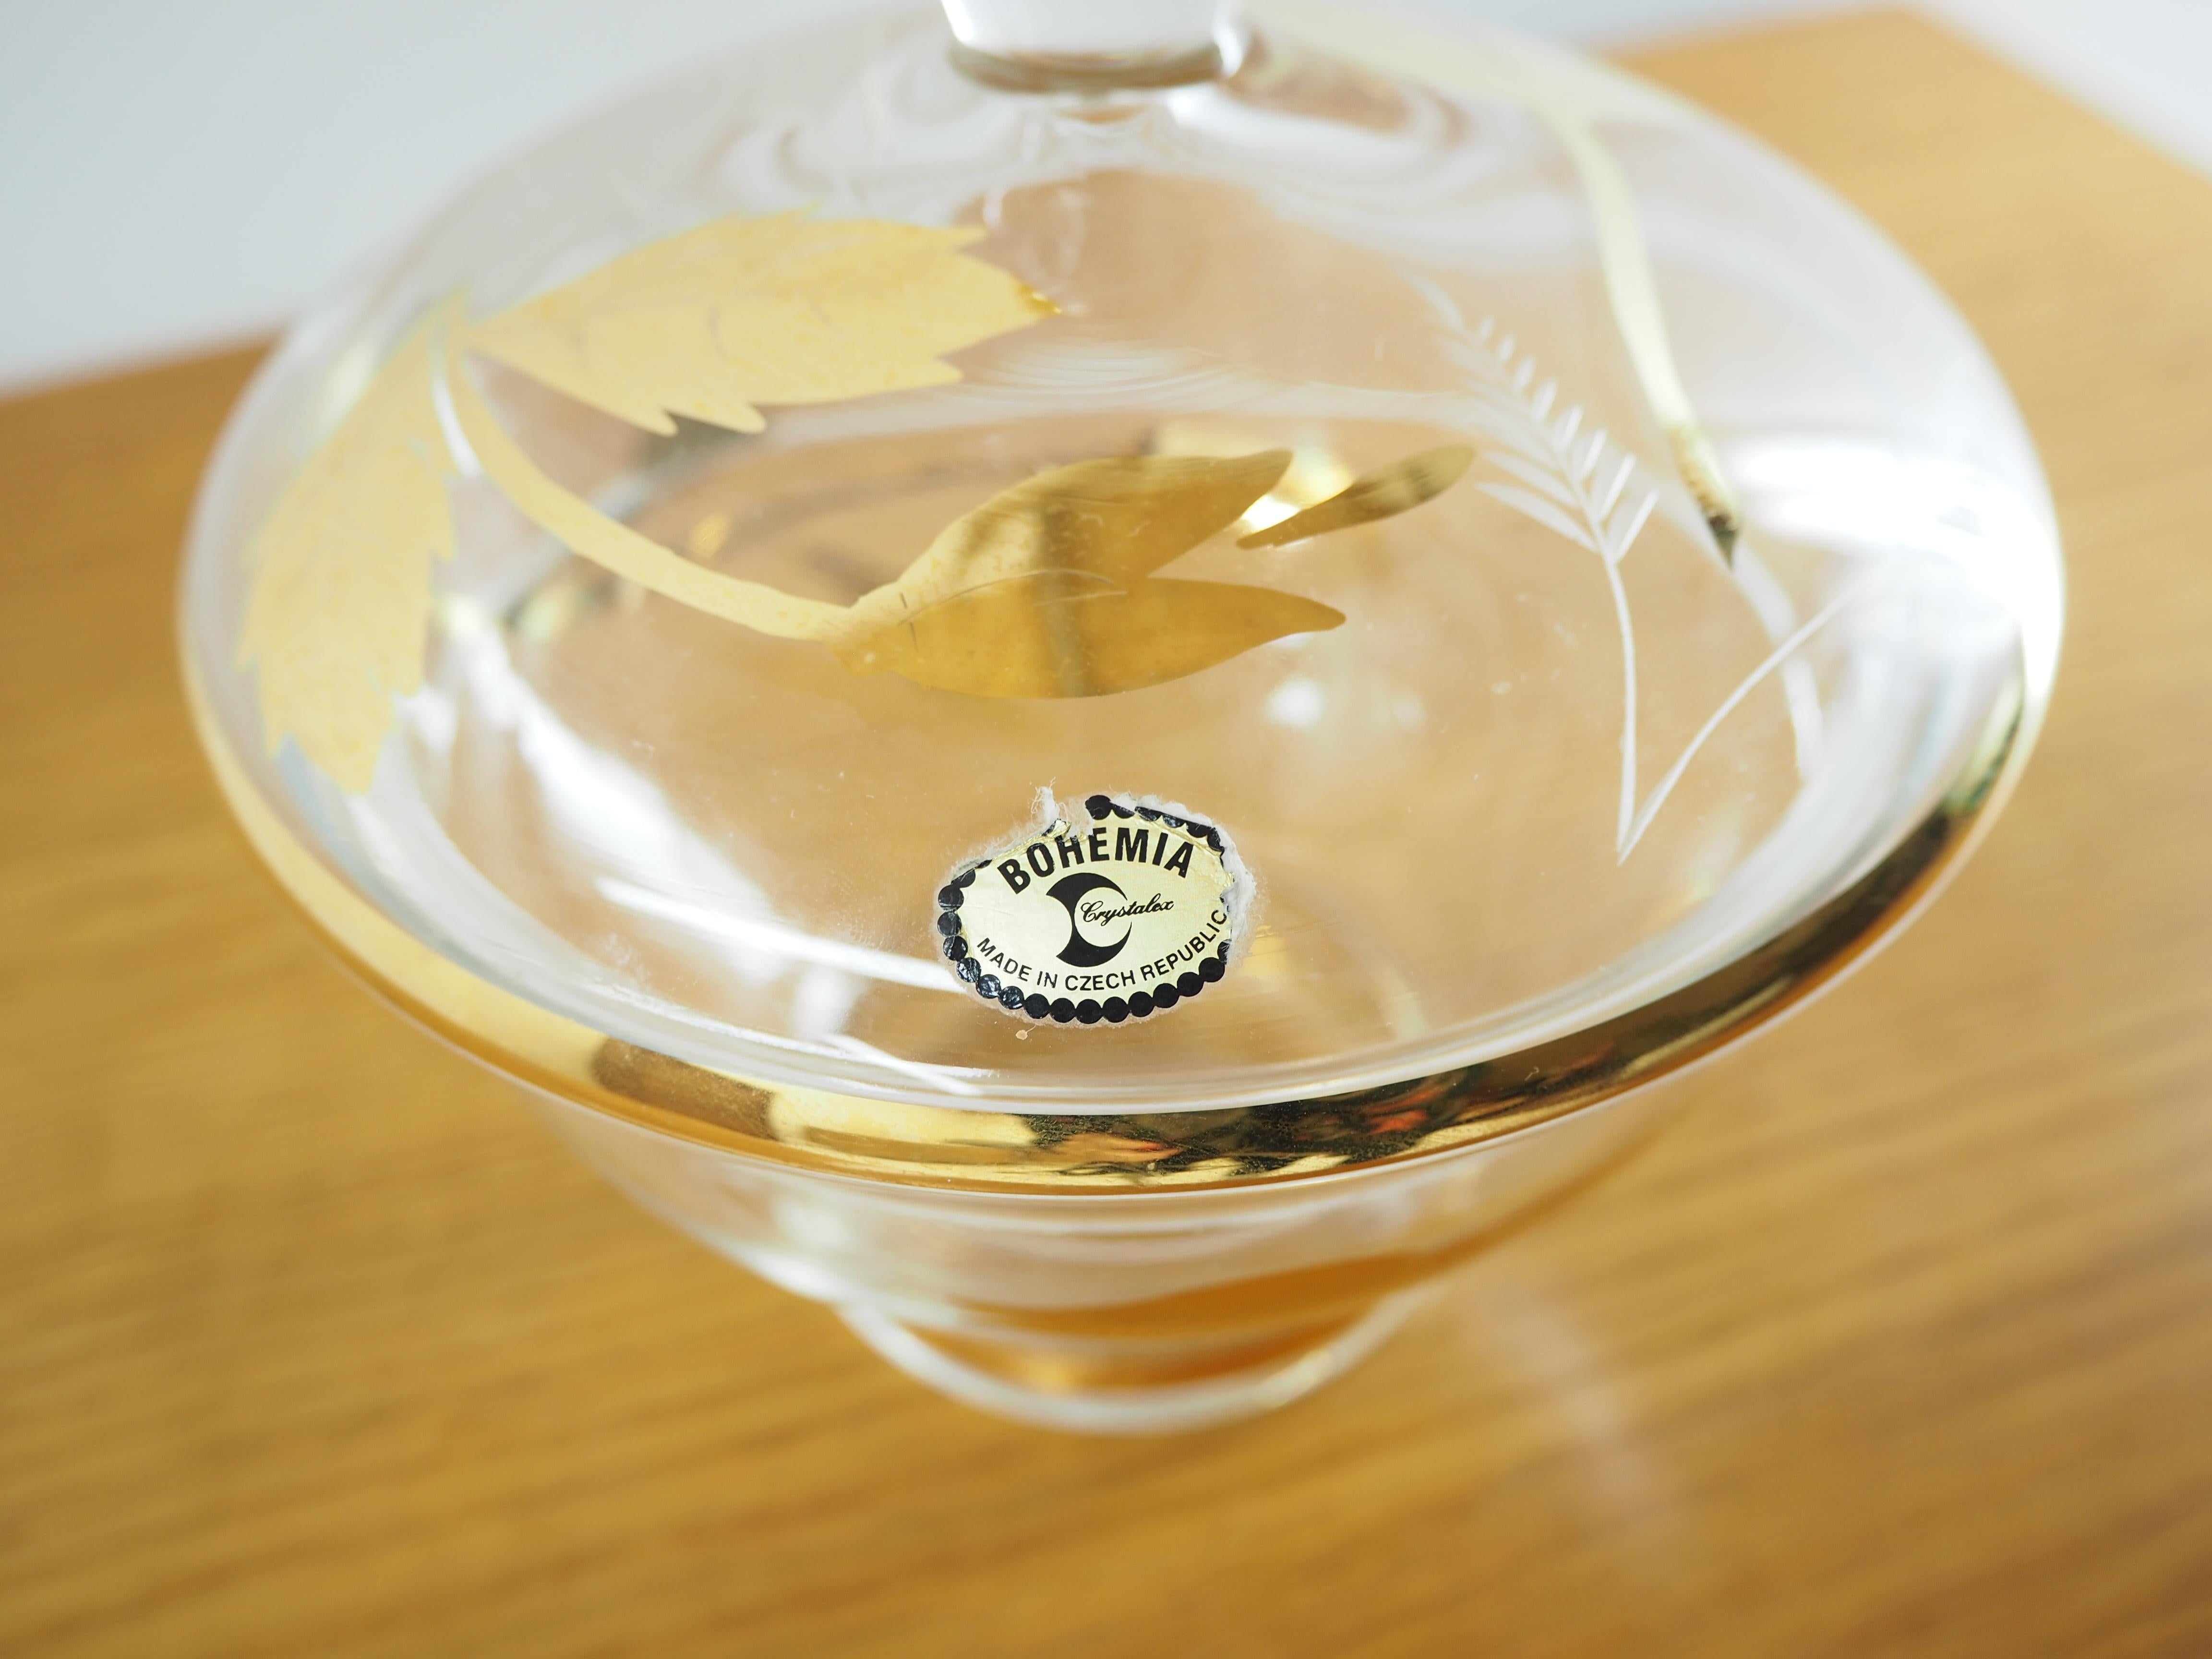 Mid-20th Century Midcentury All Glass Sugar Bowl by Bohemia Crystal Czechoslovakia, 1950s For Sale